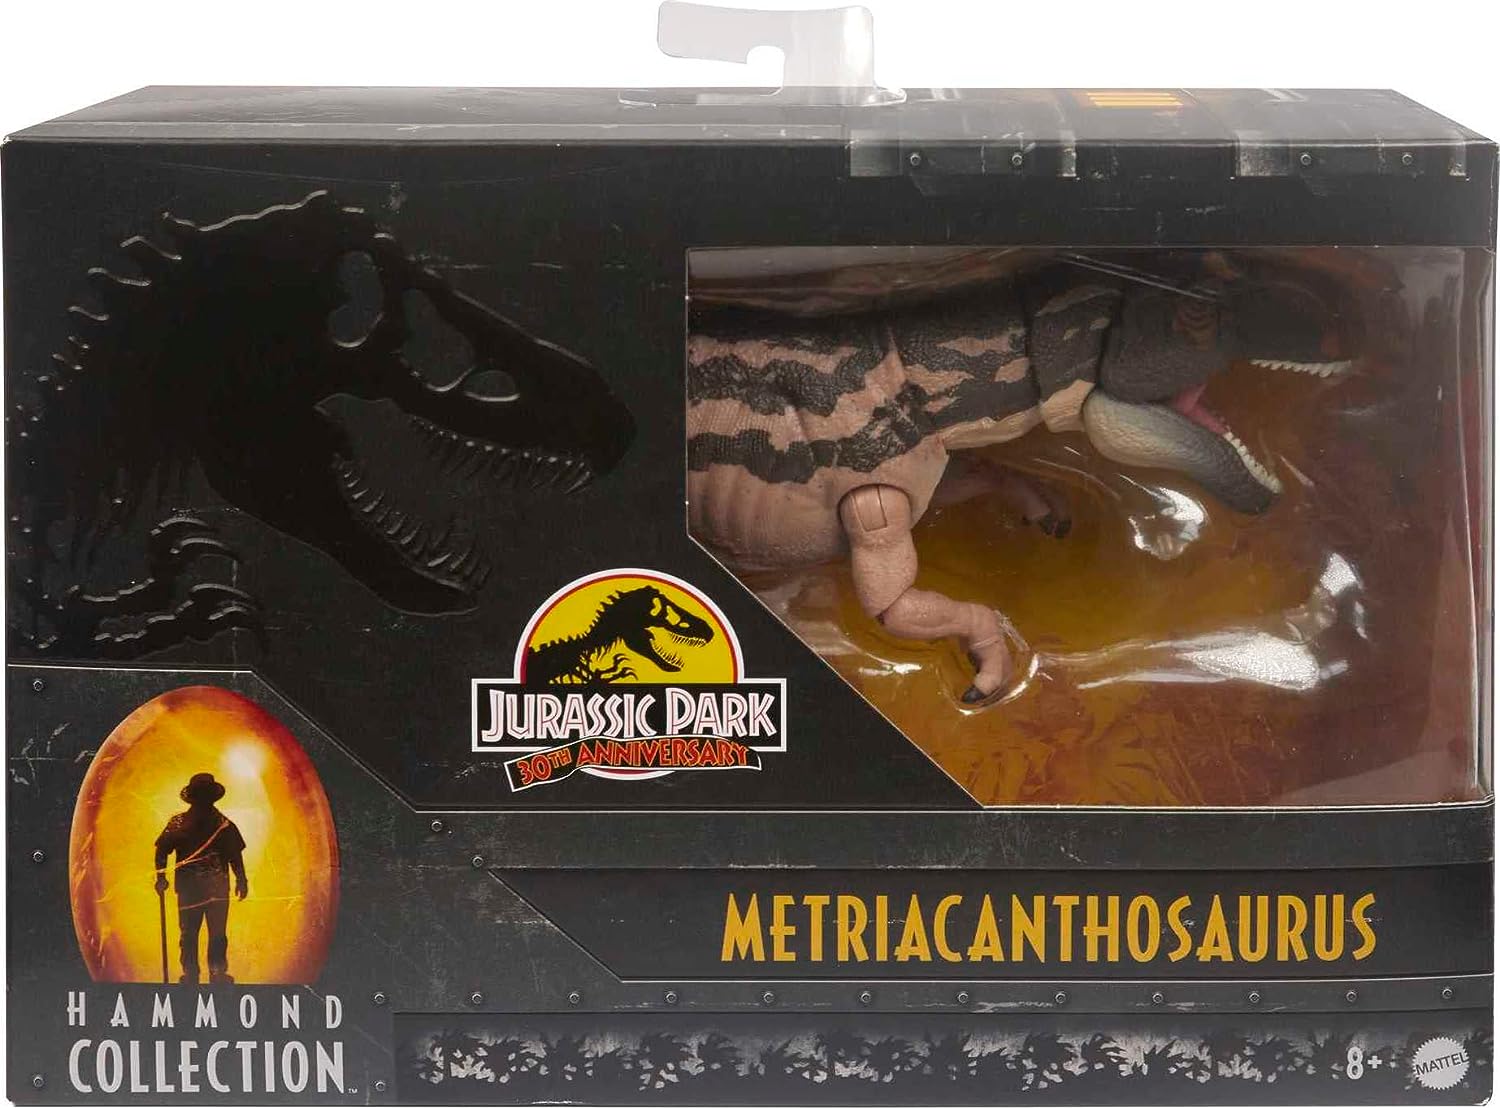 Jurassic World Jurassic Park Hammond Collection Dinosaur Figure Metriacanthosaurus, Medium Size Dino Detailed Design 17 Articulations